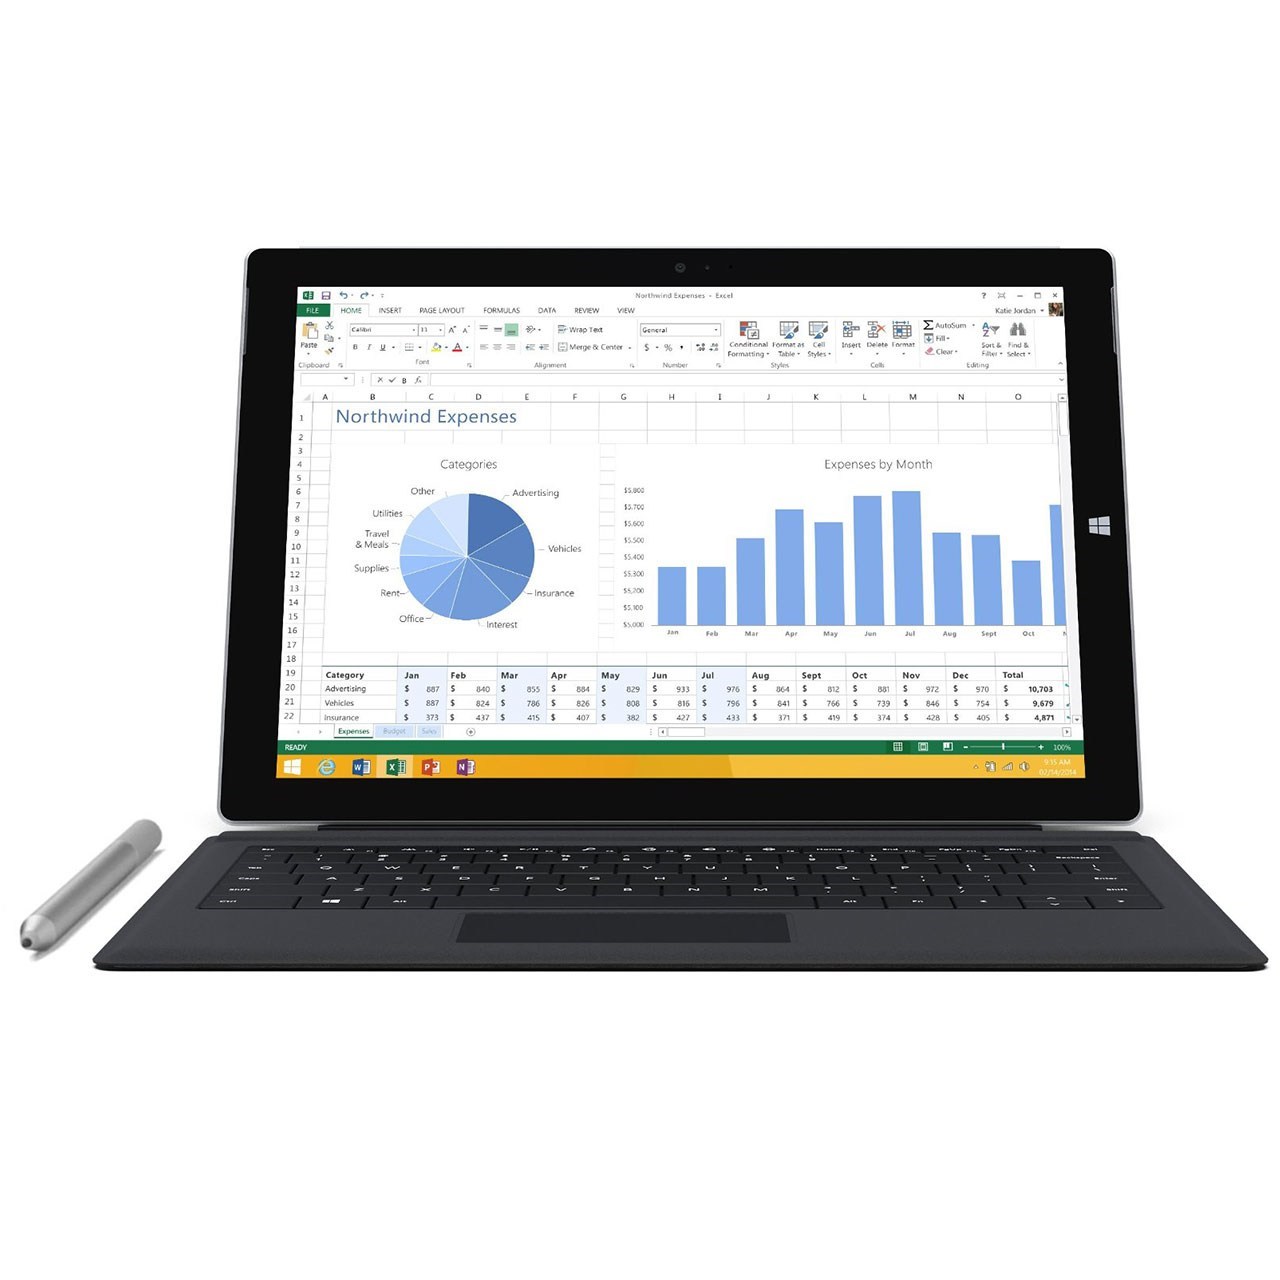 تبلت مایکروسافت مدل Surface Pro 3 - A به همراه کیبورد ظرفیت 512 گیگابایت